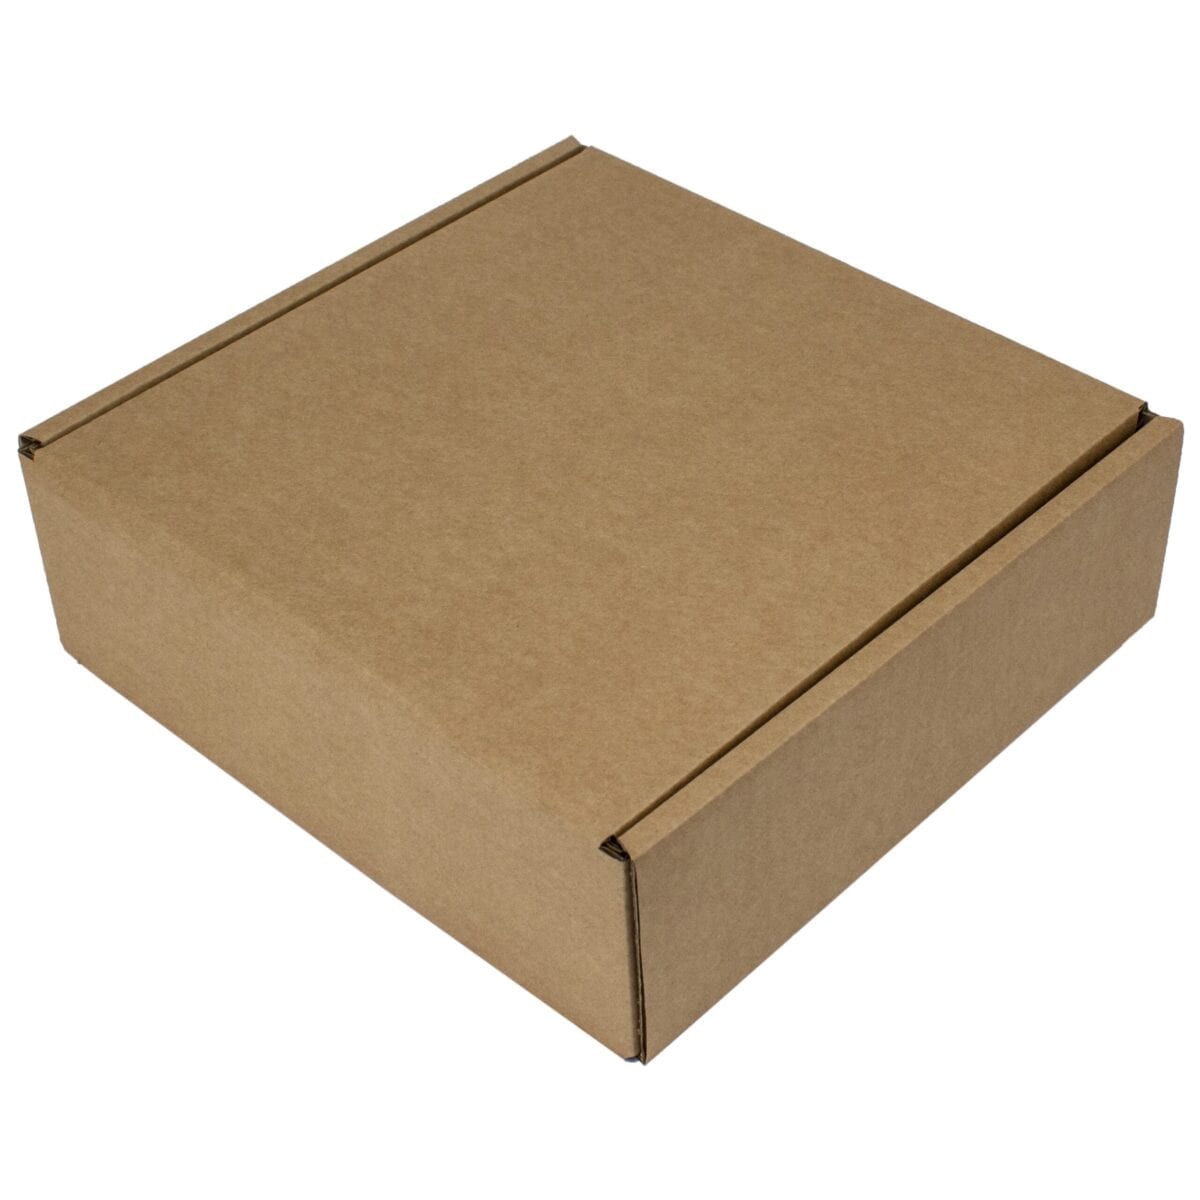 Brown Cardboard Postal Boxes 240x240x80mm | Packaging Supplies